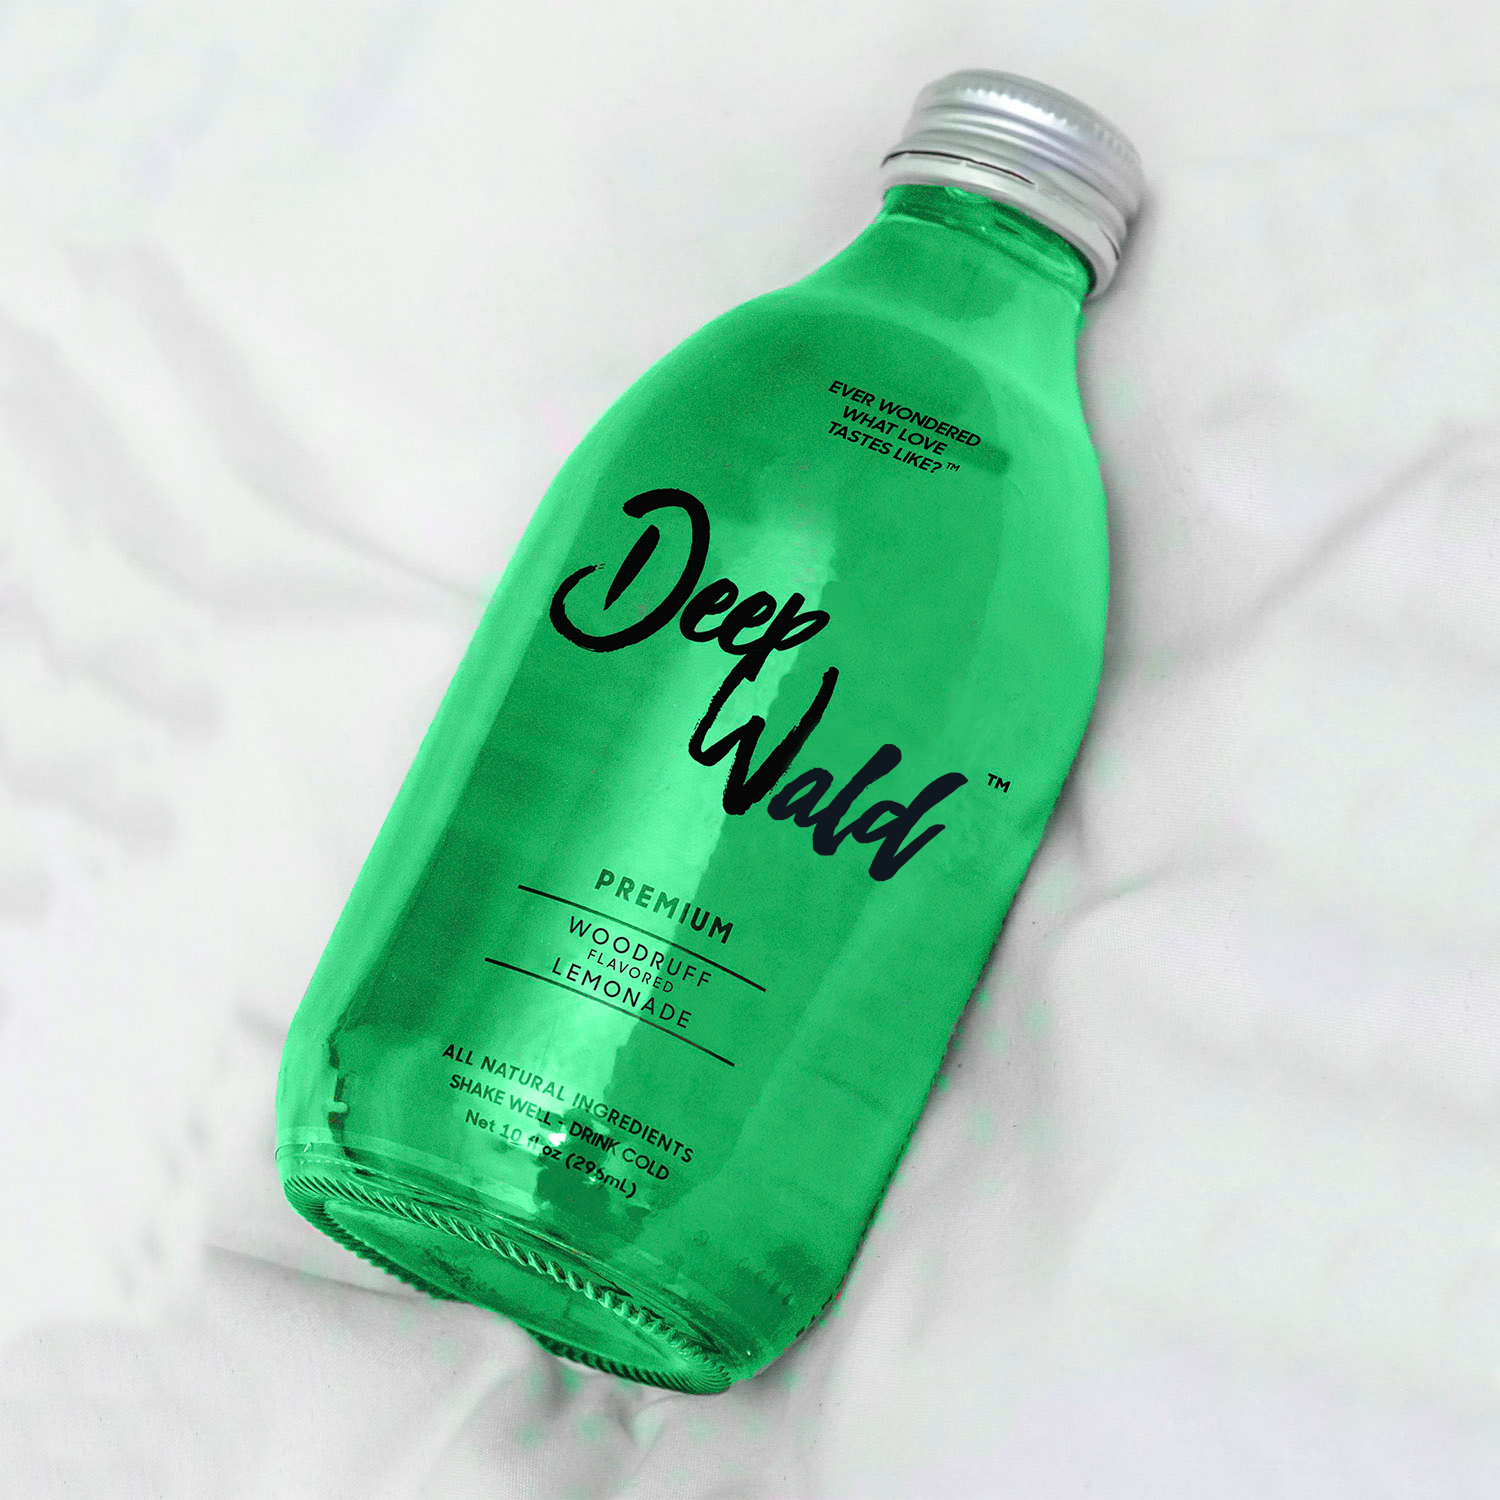 Deep Wald -Premium Woodruff Type Lemonade- 12 units per case 10.0 oz